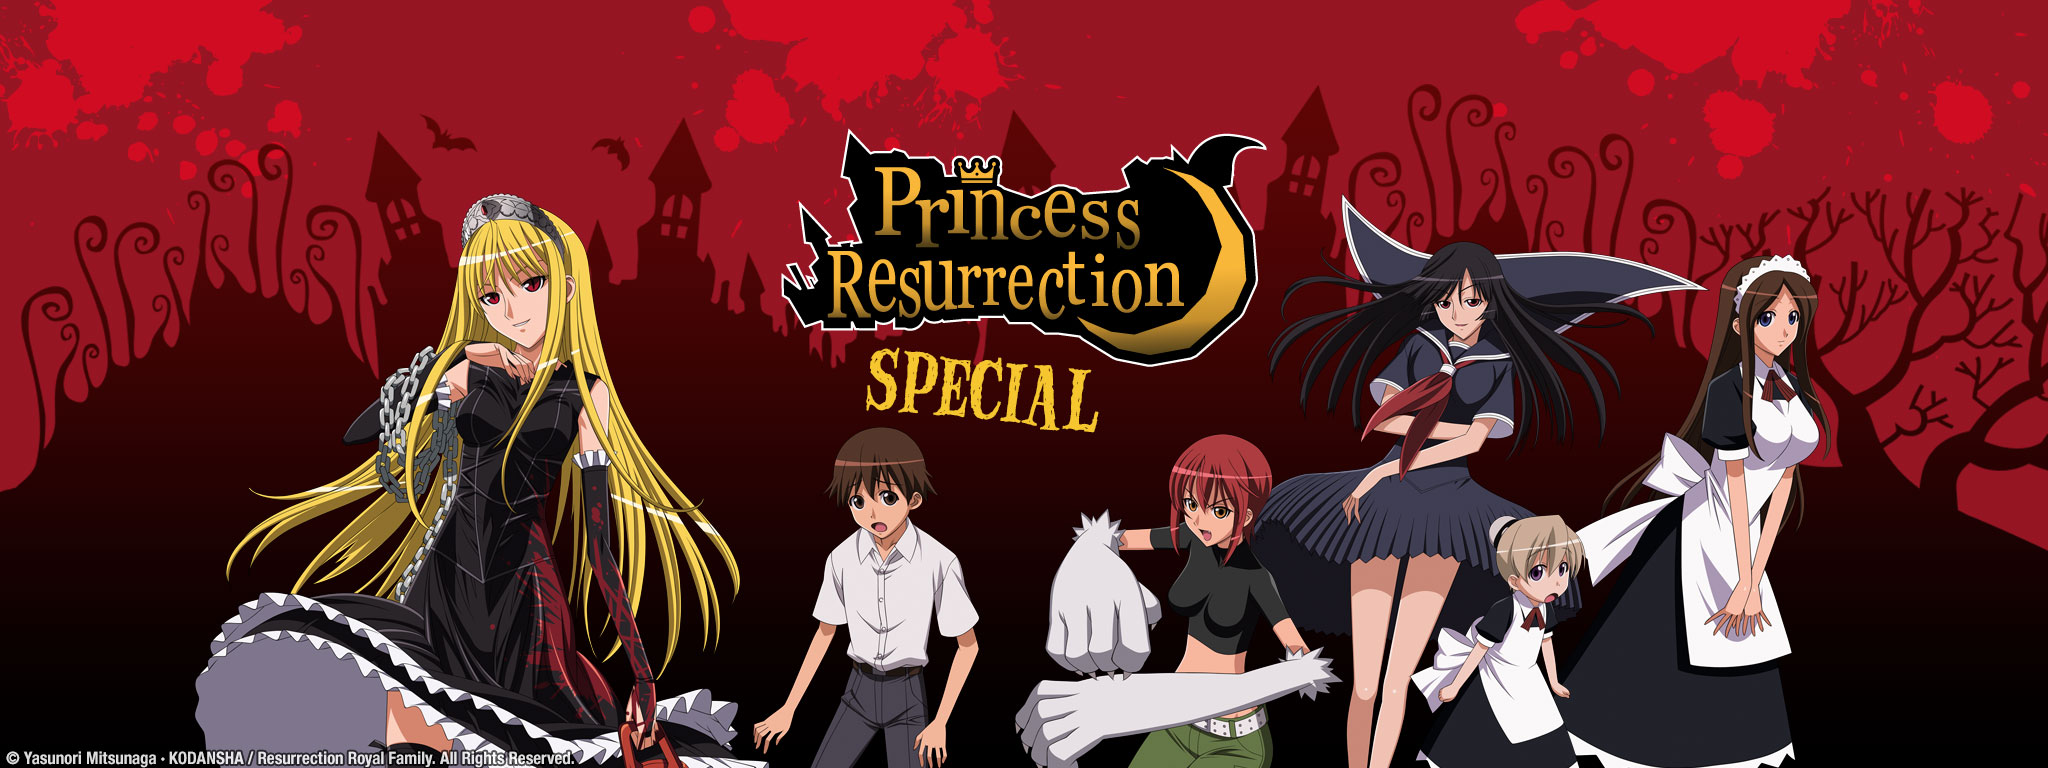 Title Art for Princess Resurrection - OVA